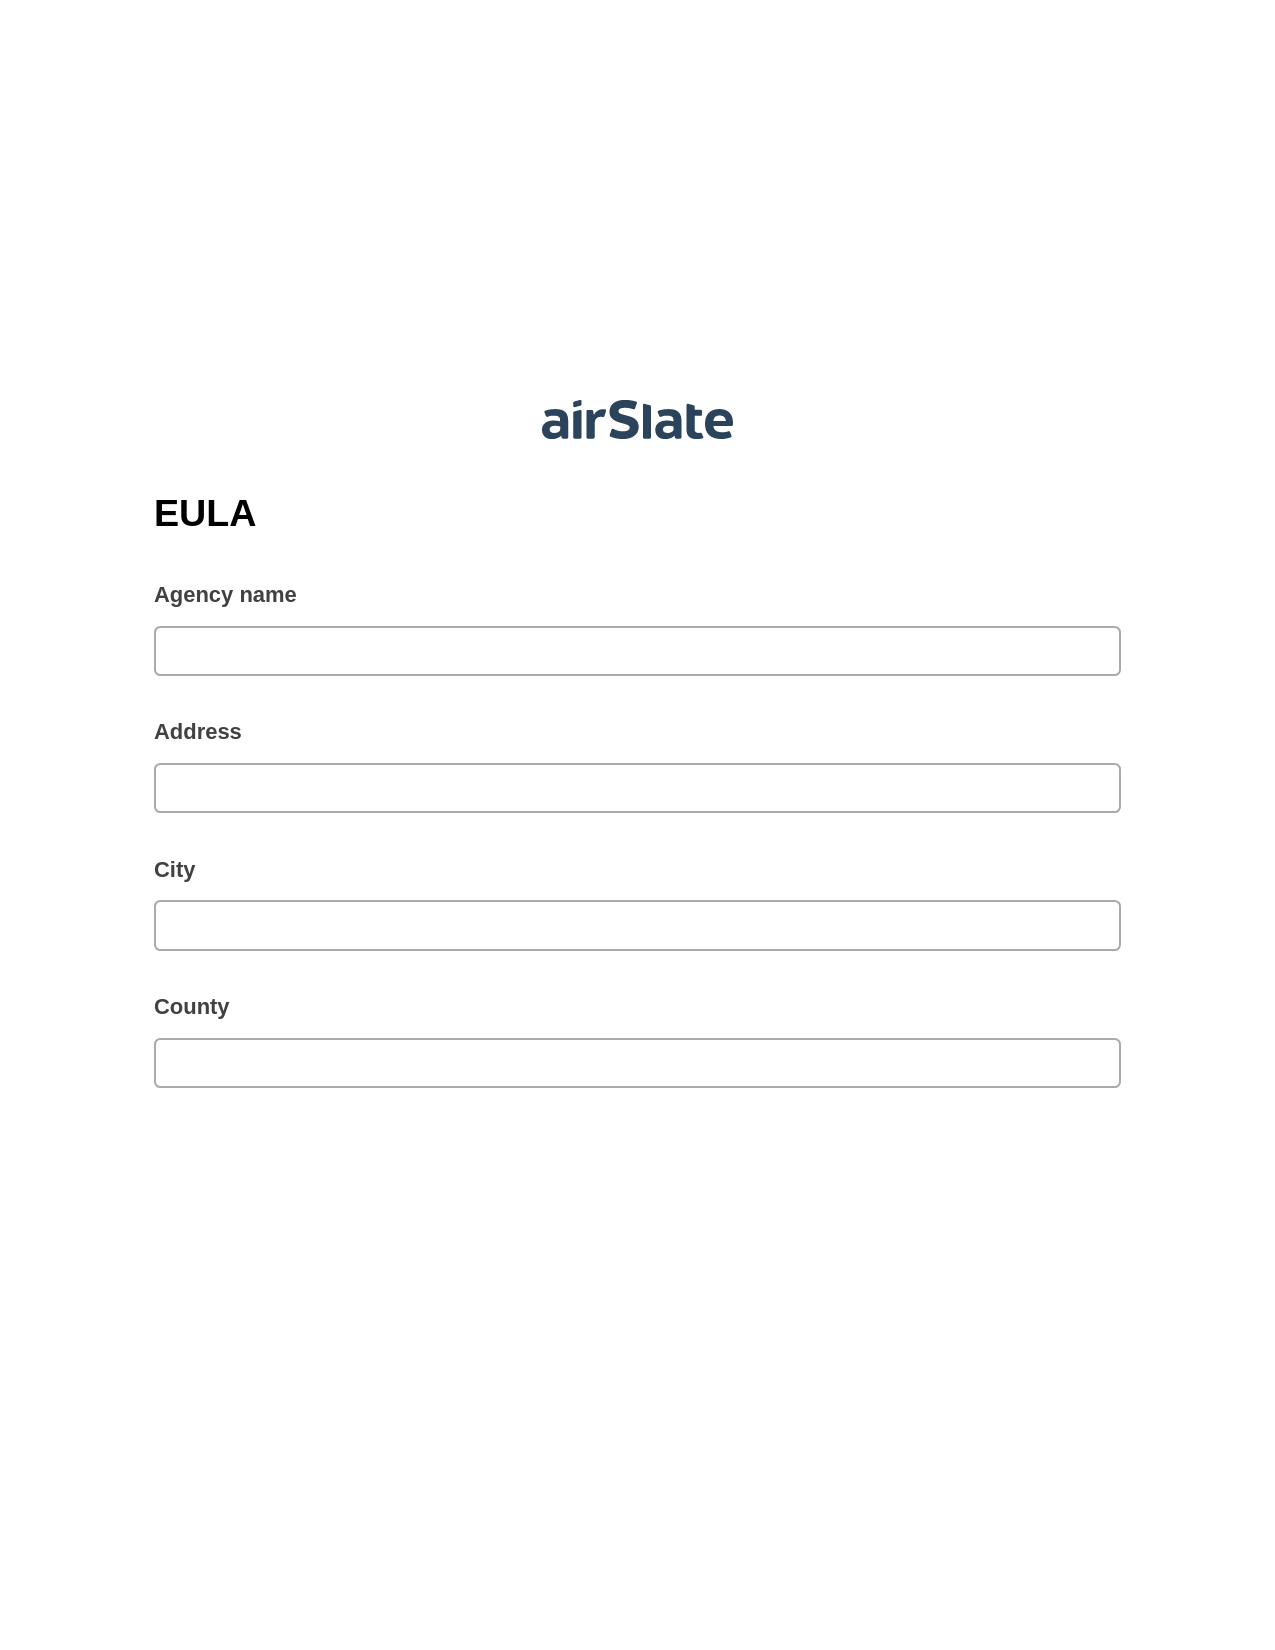 EULA Pre-fill Dropdowns from Office 365 Excel Bot, Revoke Access Bot, Dropbox Bot